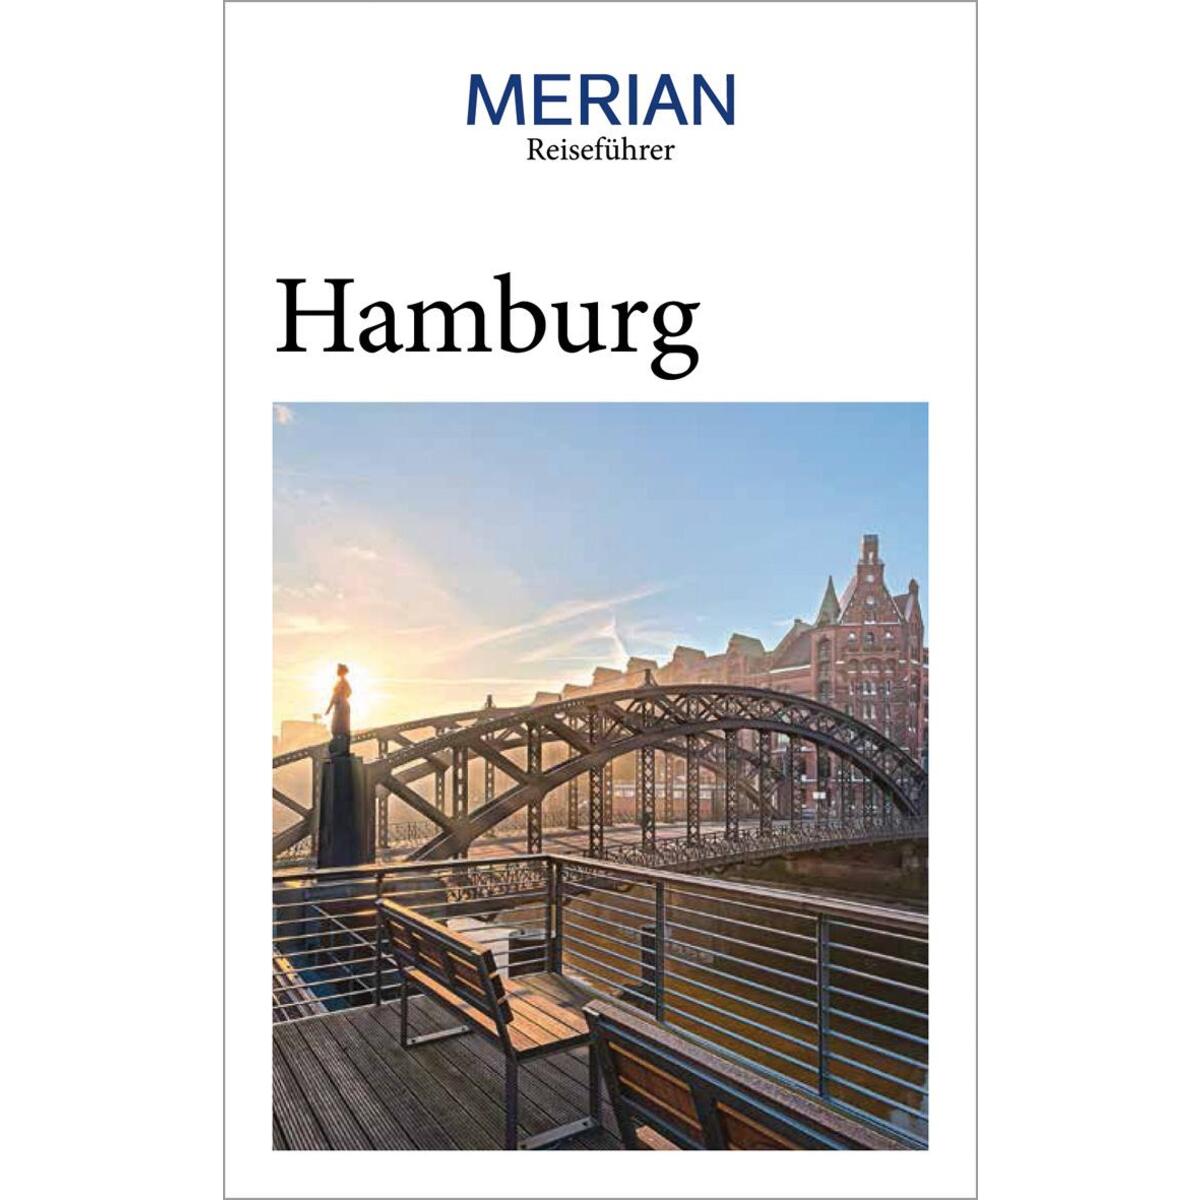 MERIAN Reiseführer Hamburg von Travel House Media GmbH